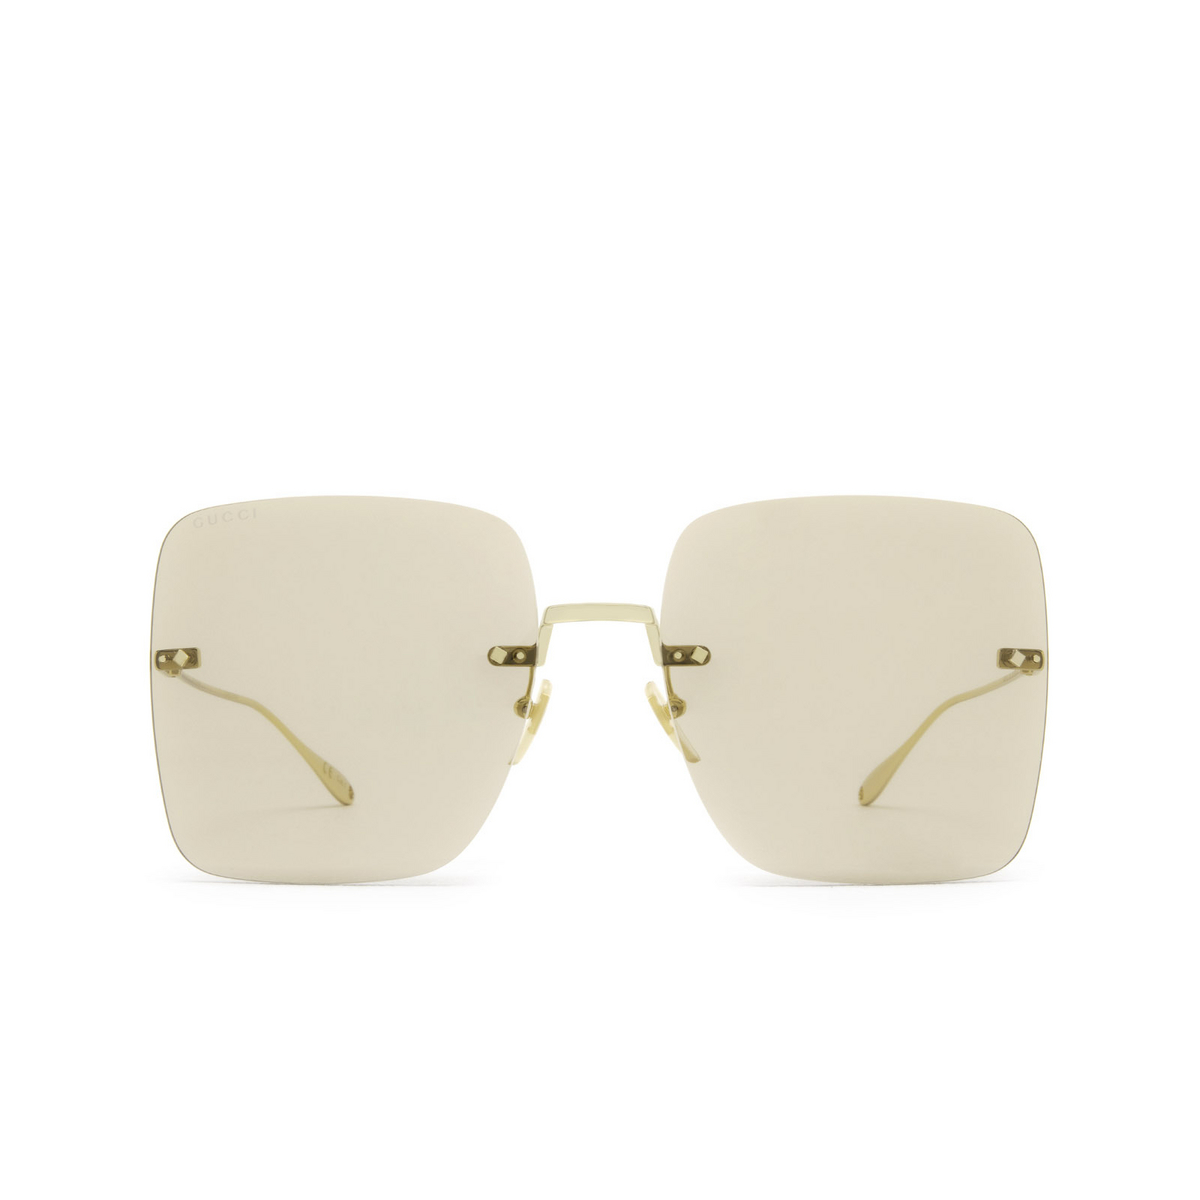 Gucci® Square Sunglasses: GG1147S color Gold 003 - front view.